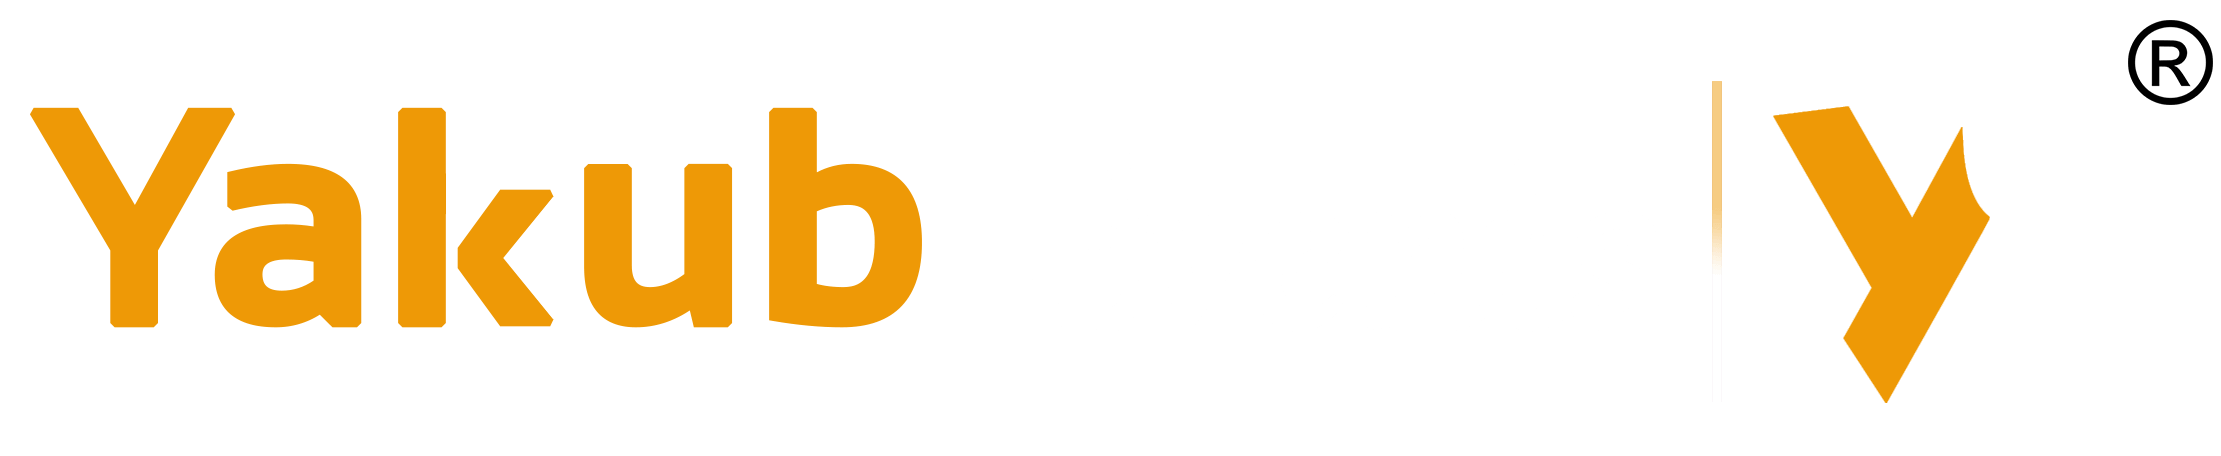 yakubevents logo